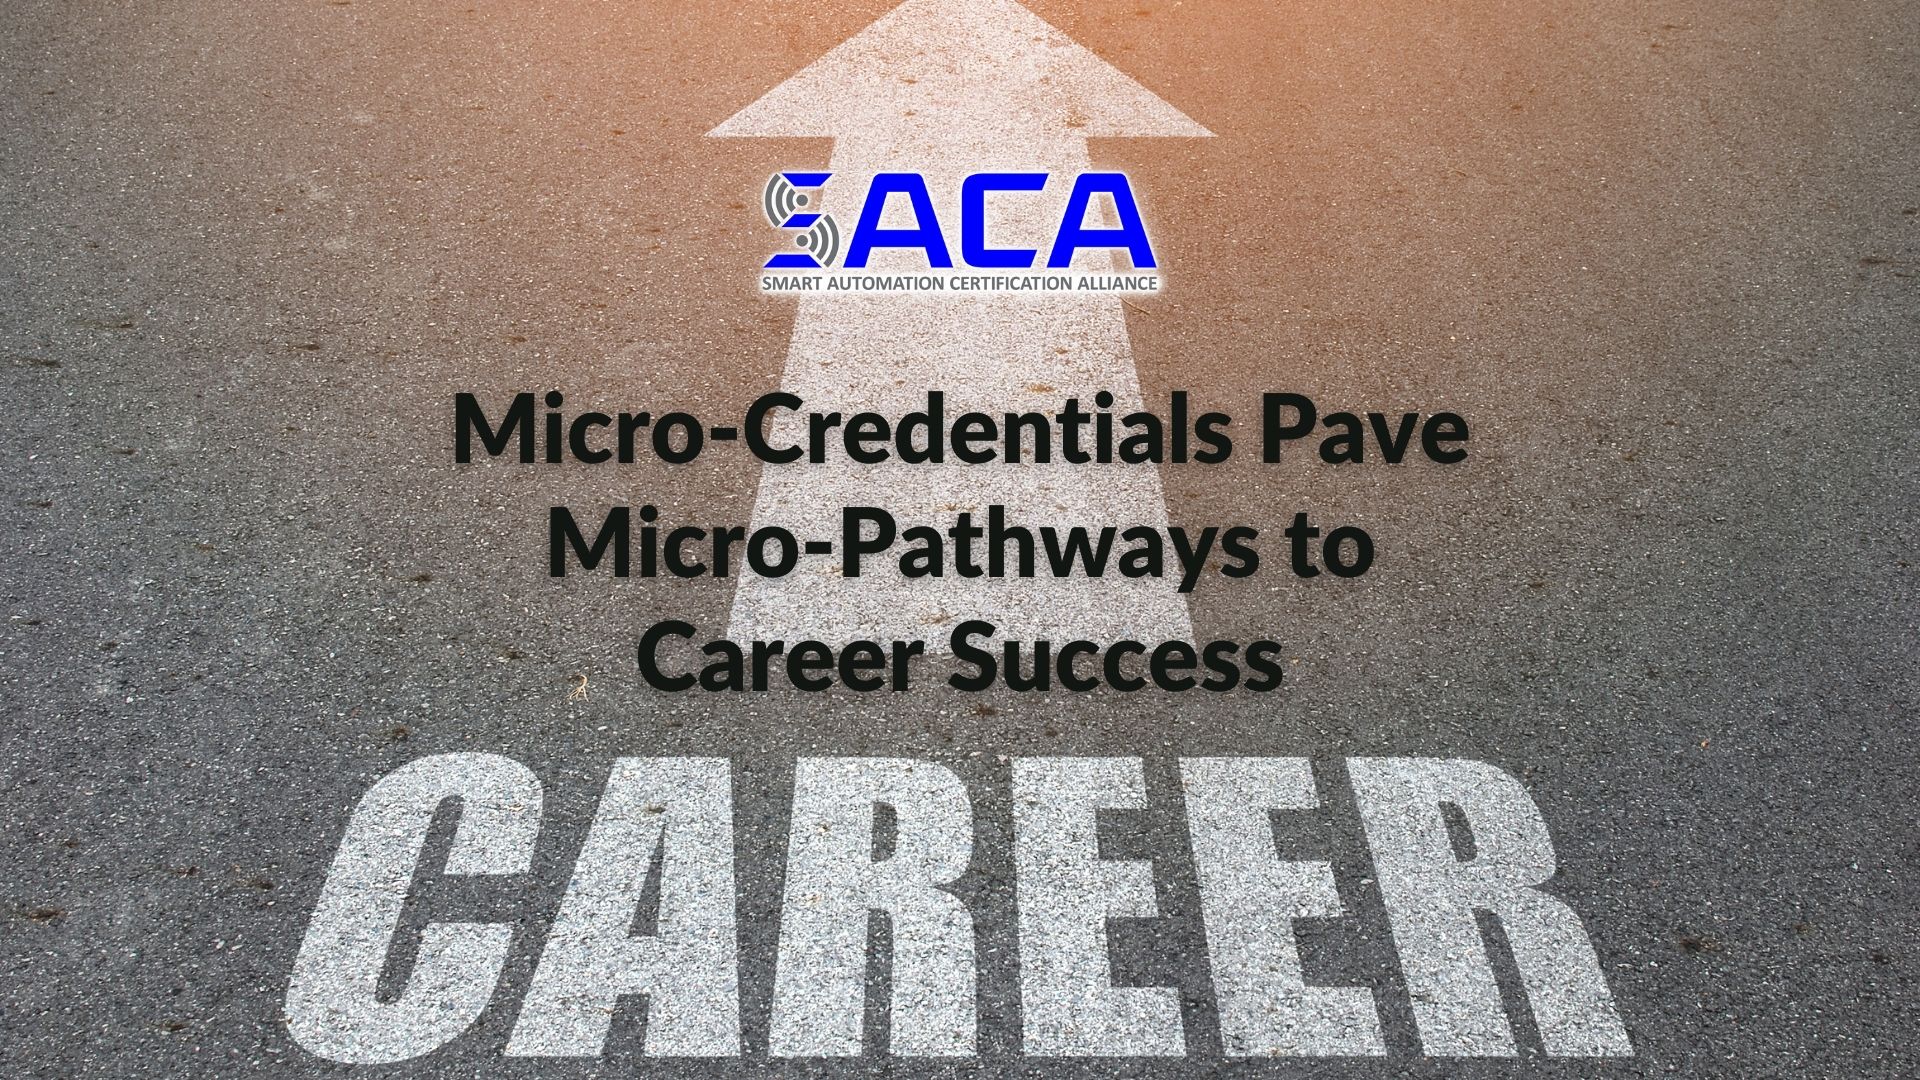 SACA - Micro-Credentials Pave Micro-Pathways to Career Success